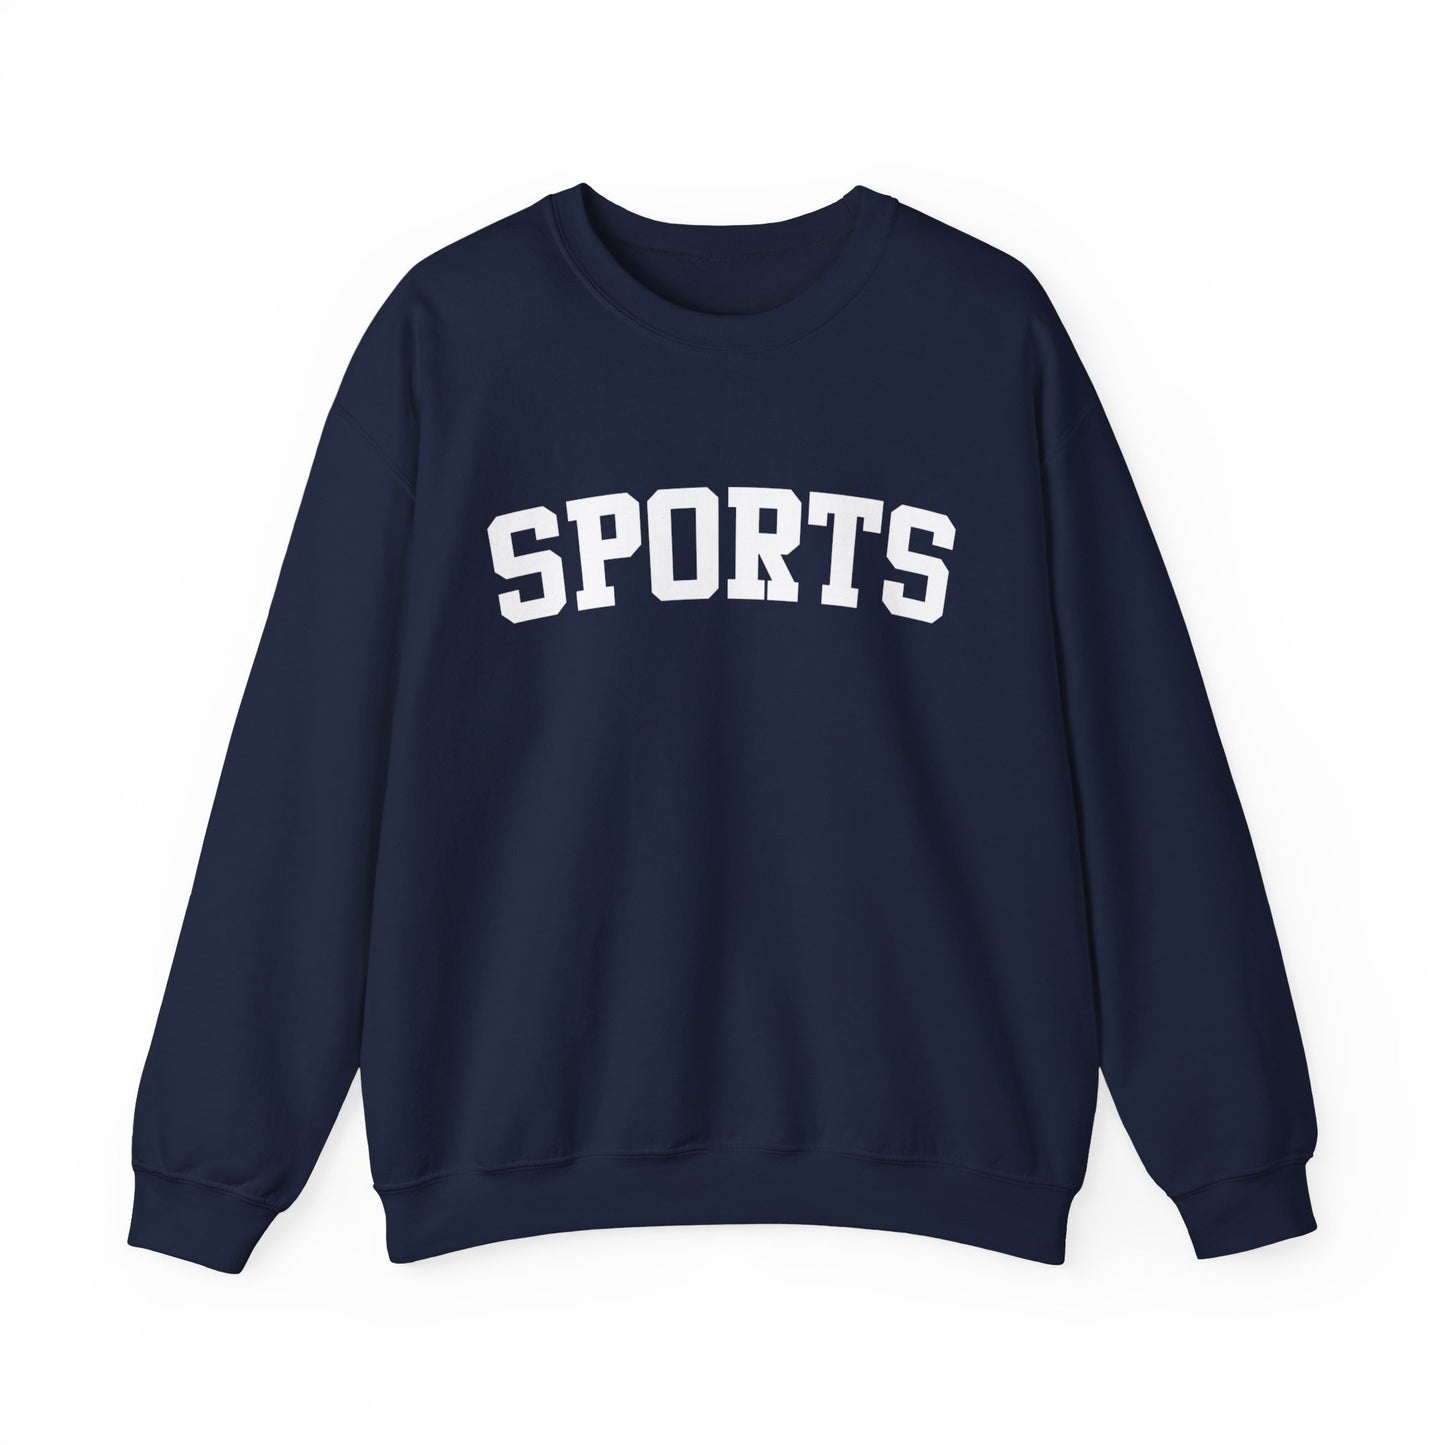 Sports - Unisex Crewneck Sweatshirt